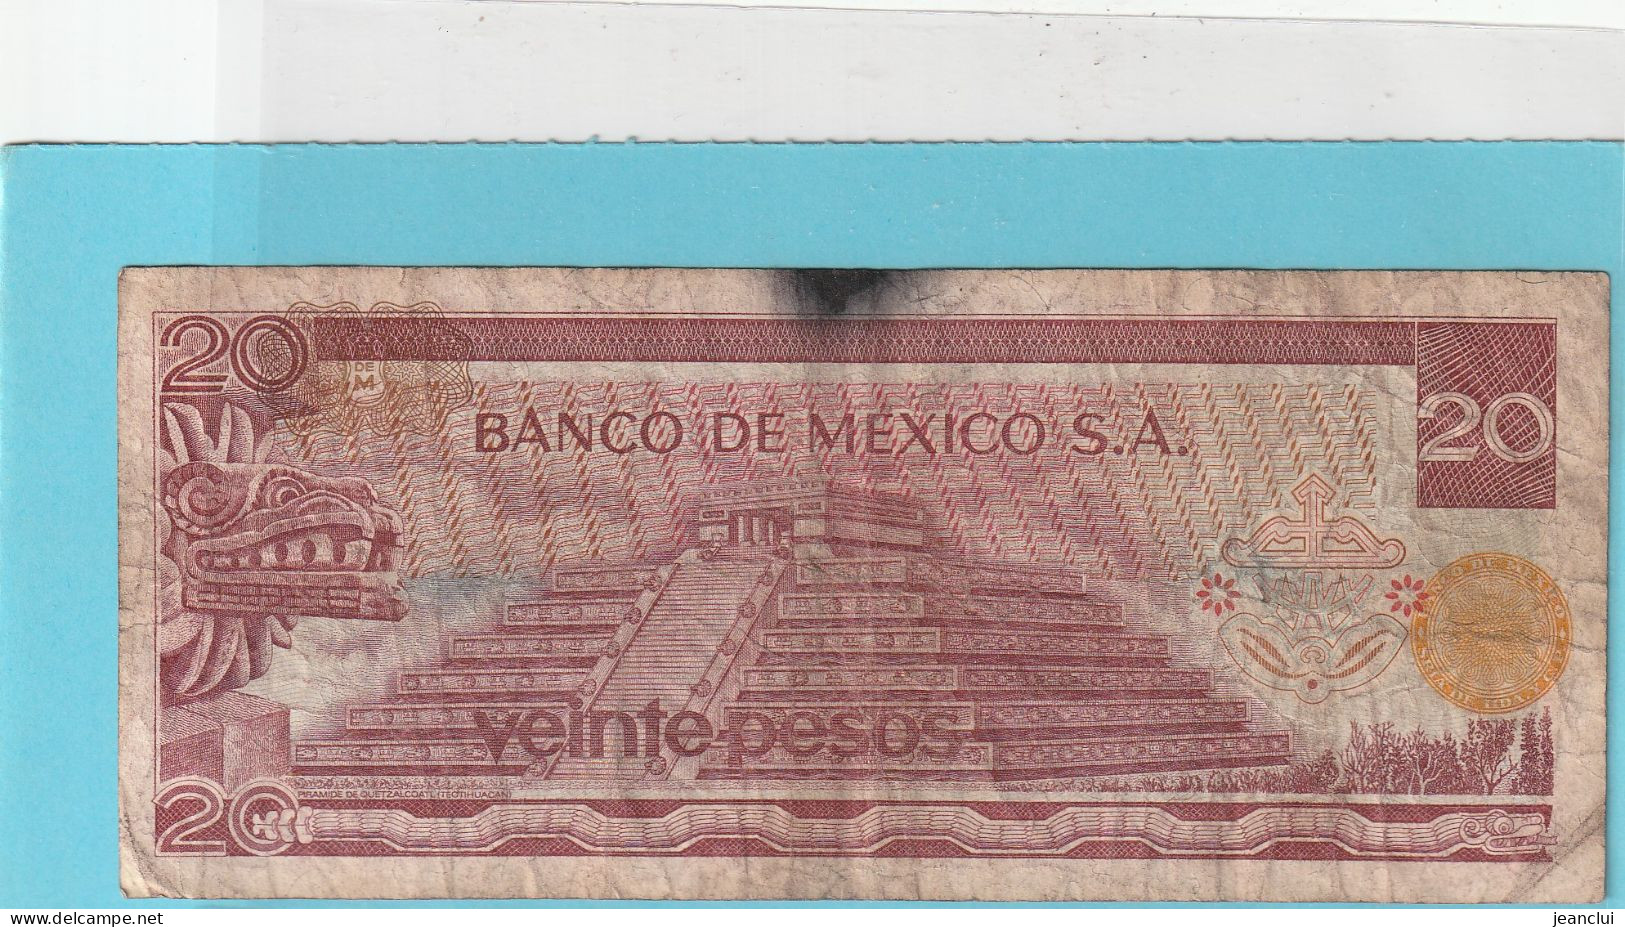 EL BANCO DE MEXICO S.A.   .  20 PESOS  .  18-7-1973  .  N°  L 8388428 .  2 SCANNES  .  BILLET TRES USITE - México